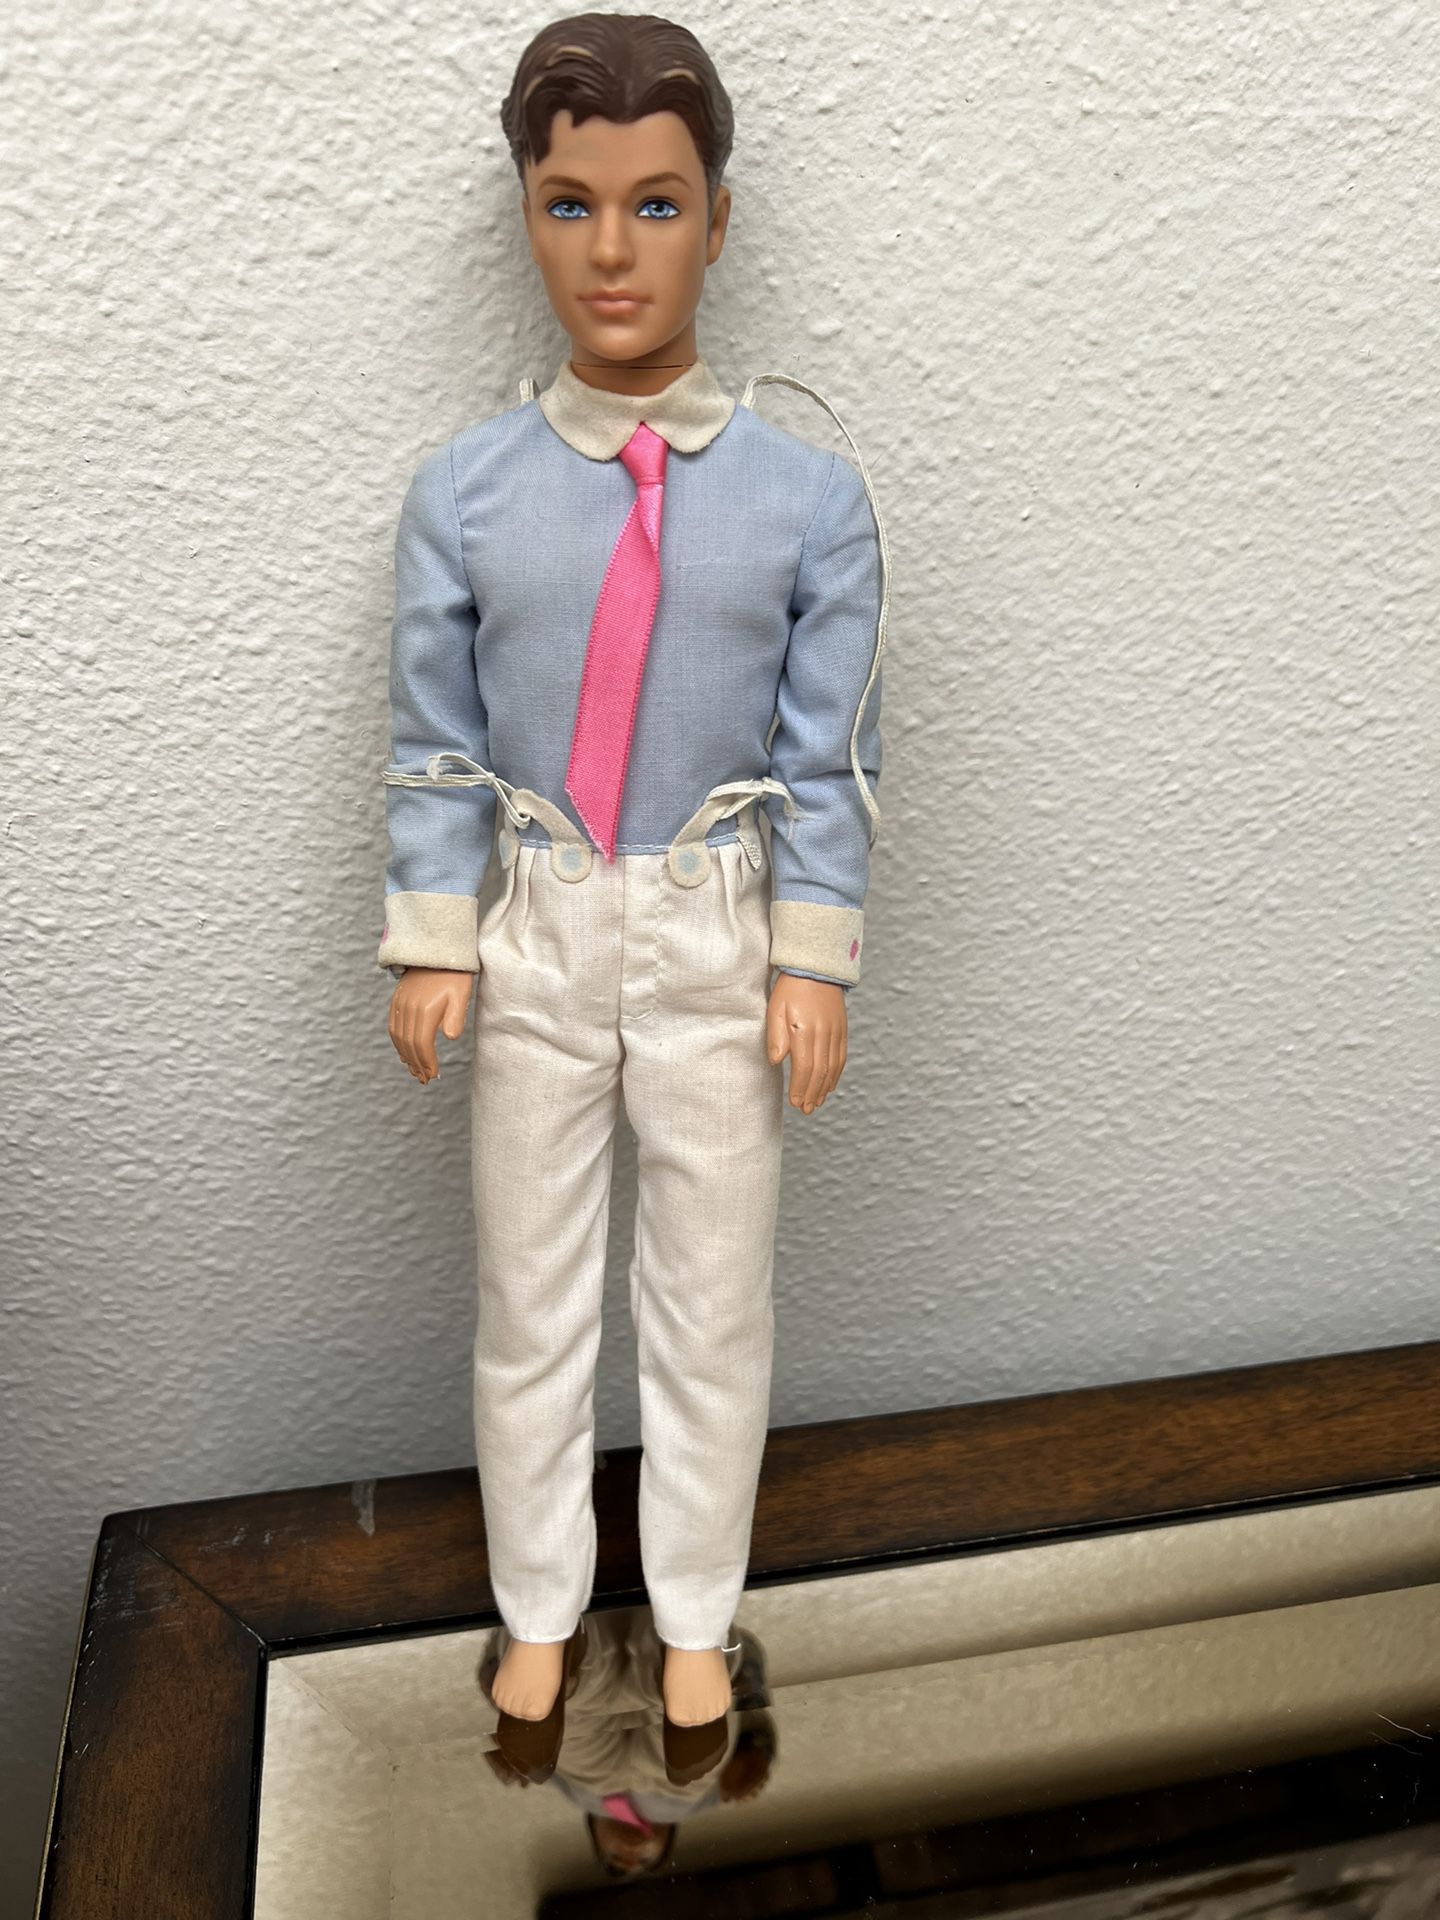 vintage rare ken barbie doll in suit clothing